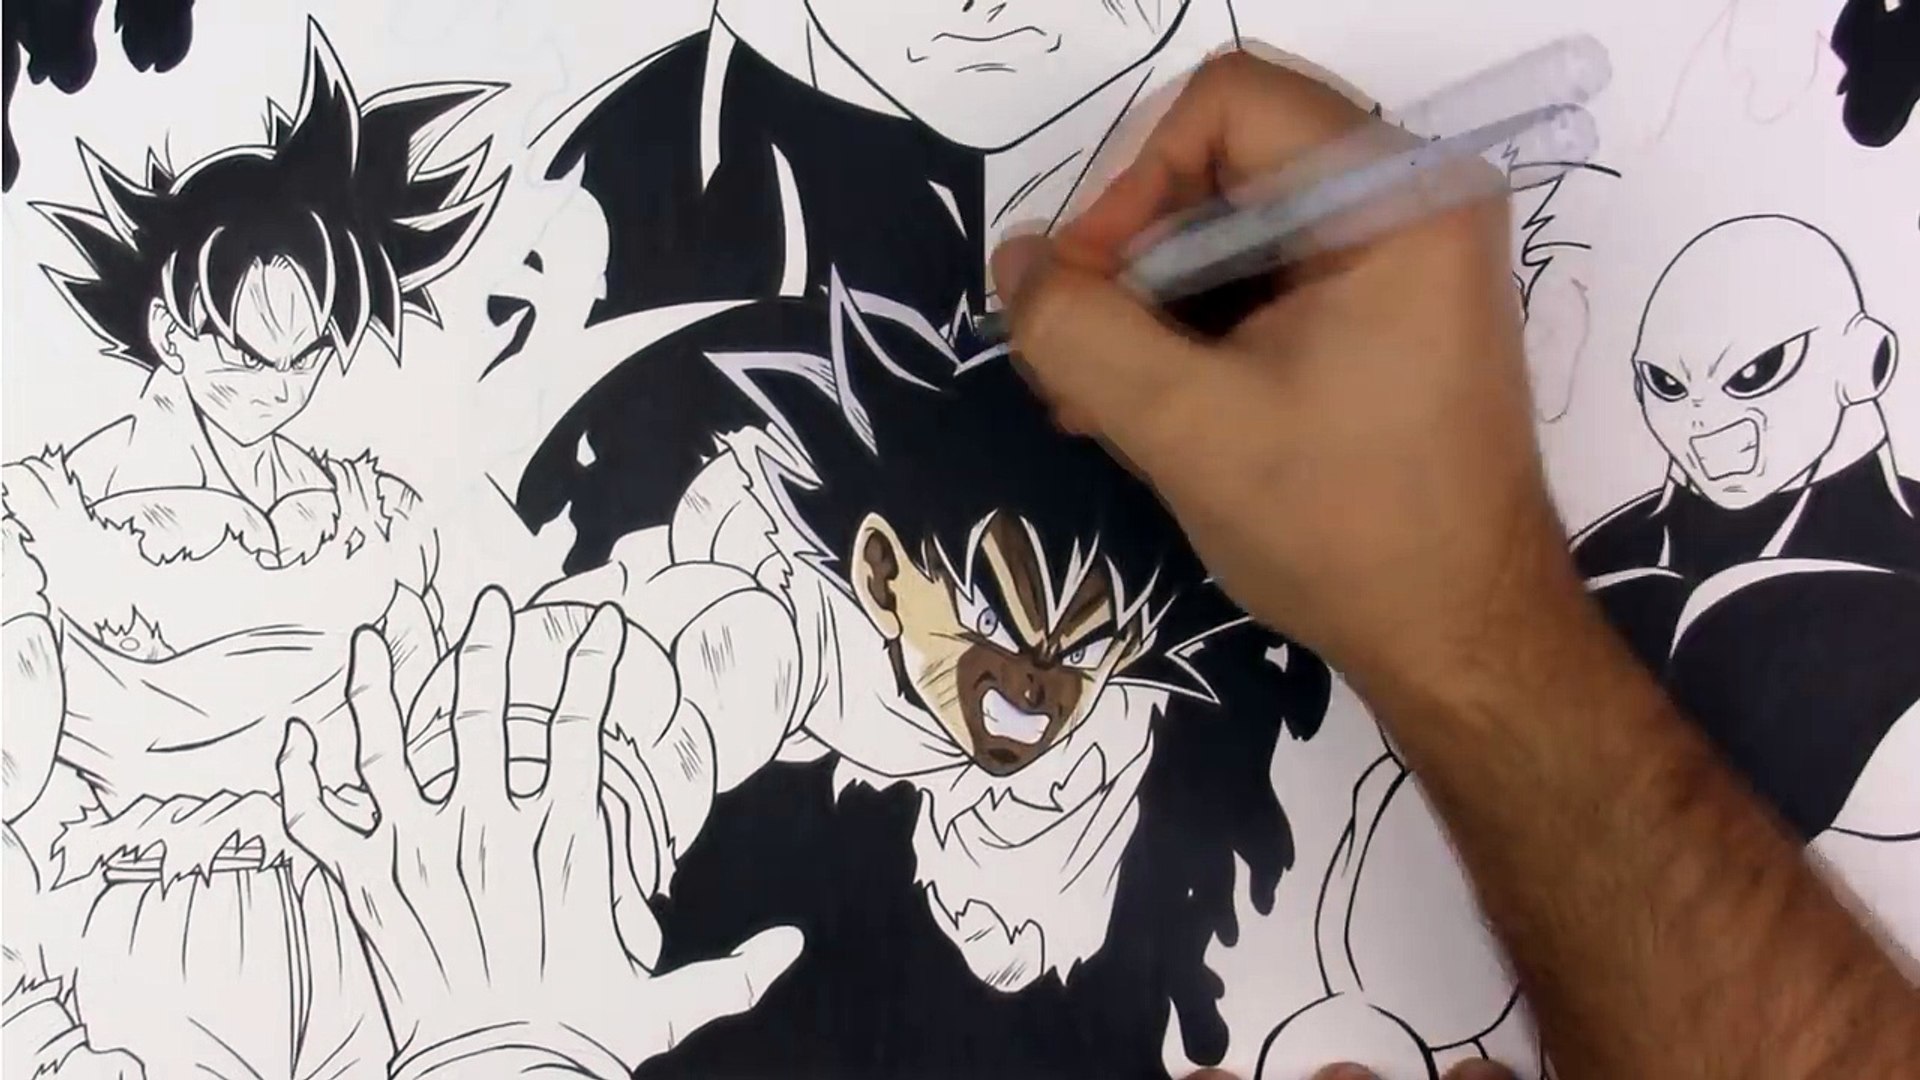 Speed drawing Goku migatte no gokui completo vs jiren - (Dragon ball super)